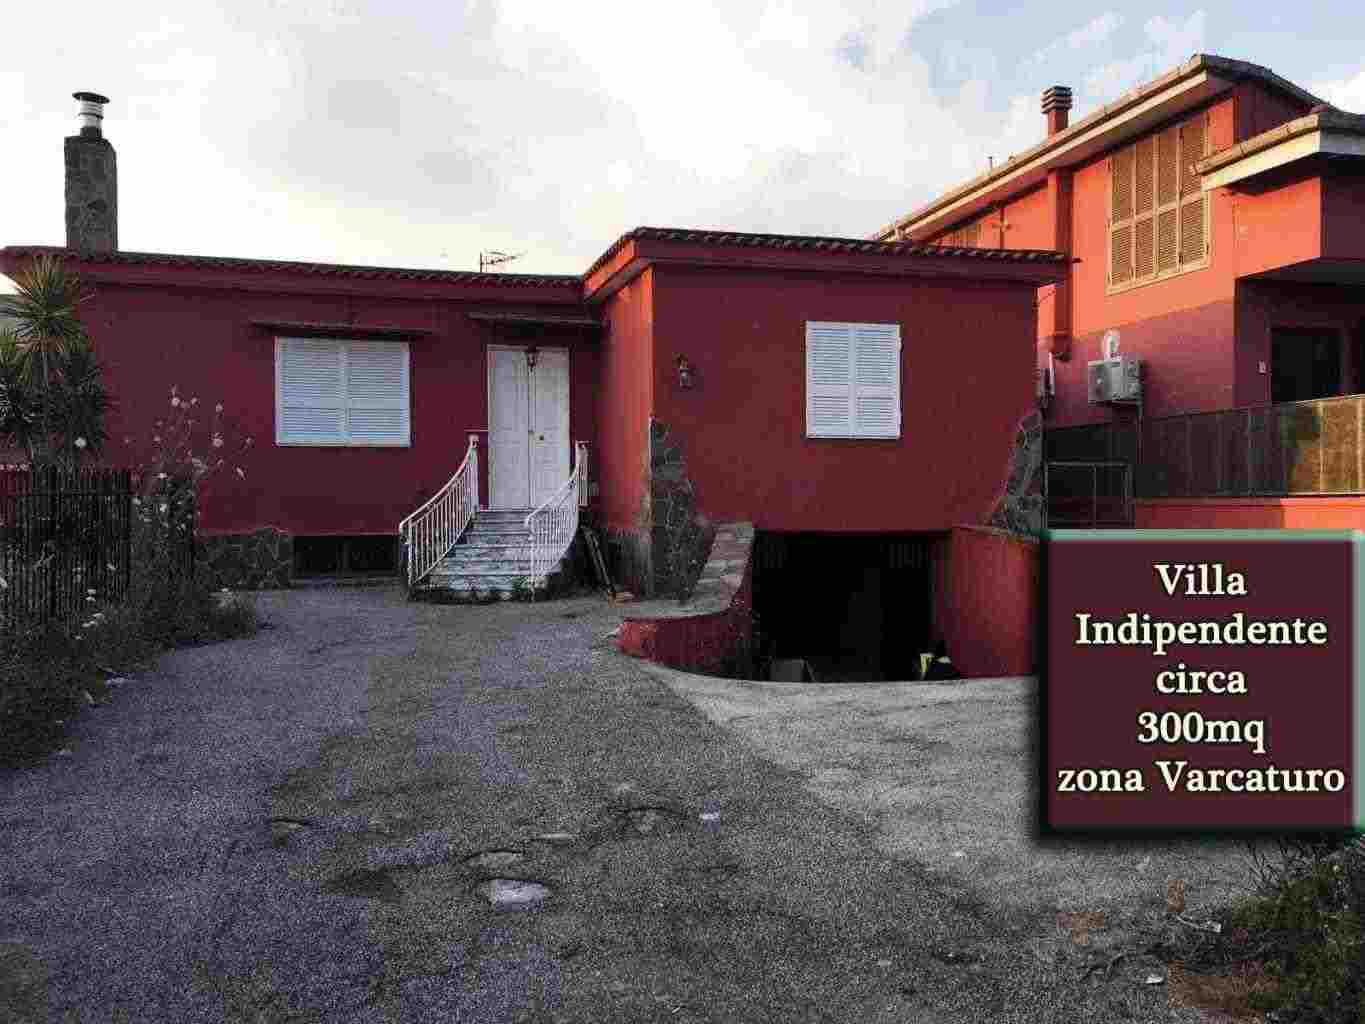 Villa indipendente circa 300mq zona Varcaturo 